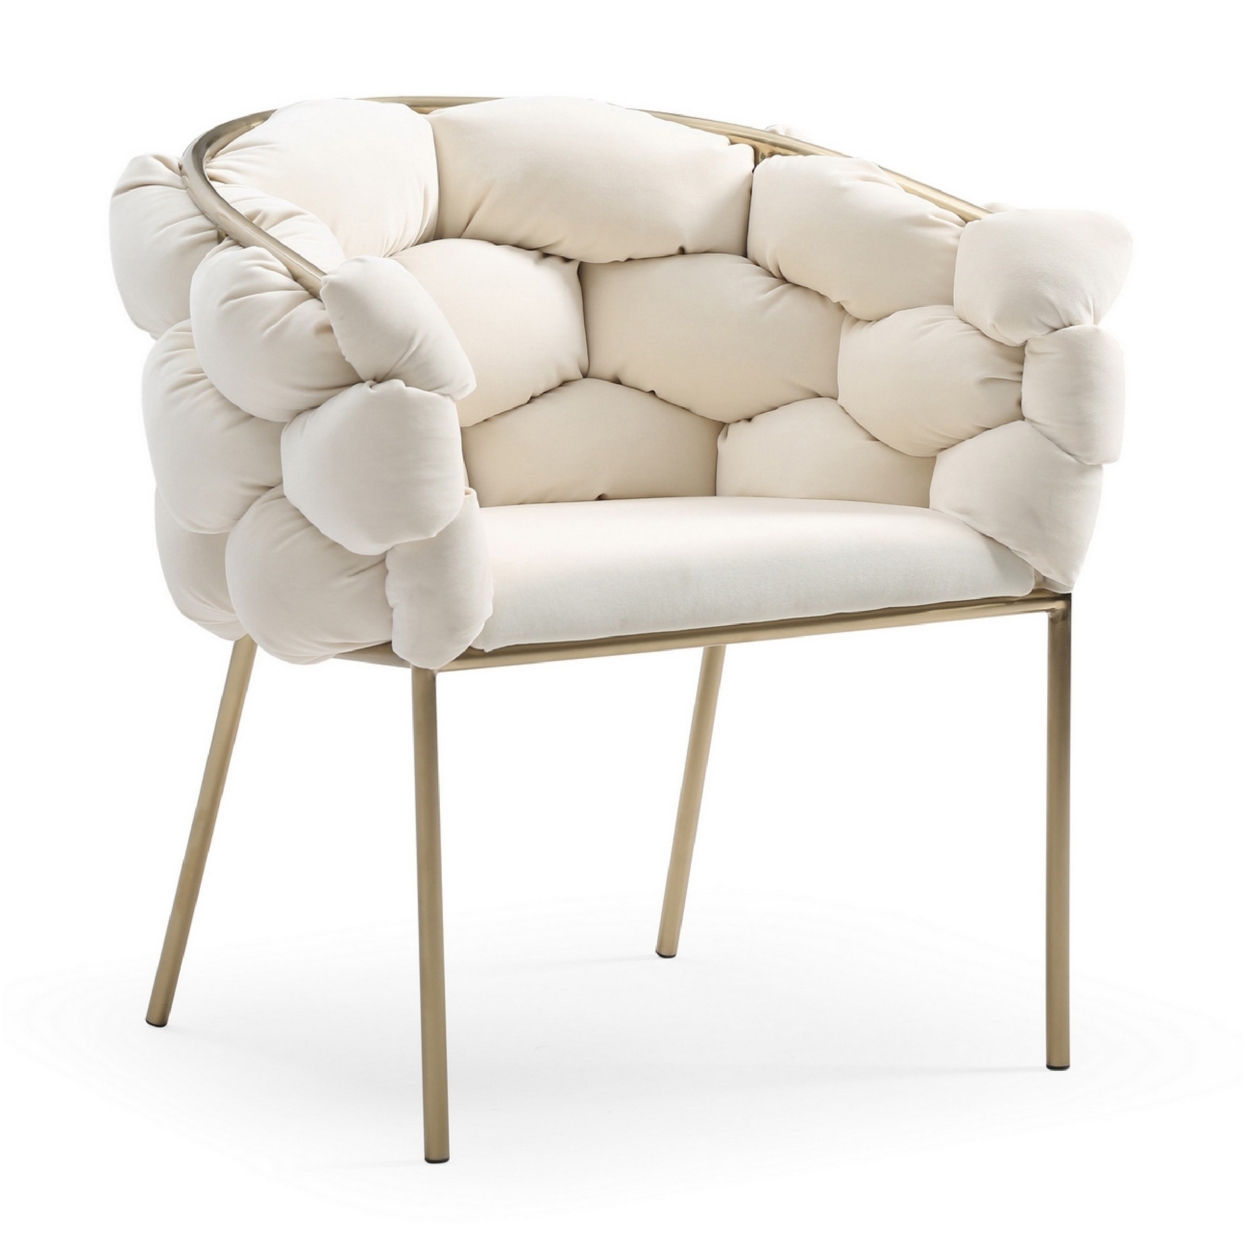 Cid 26 Inch Modern Curved Dining Chair, Bubble Tufted Back, Cream- Saltoro Sherpi